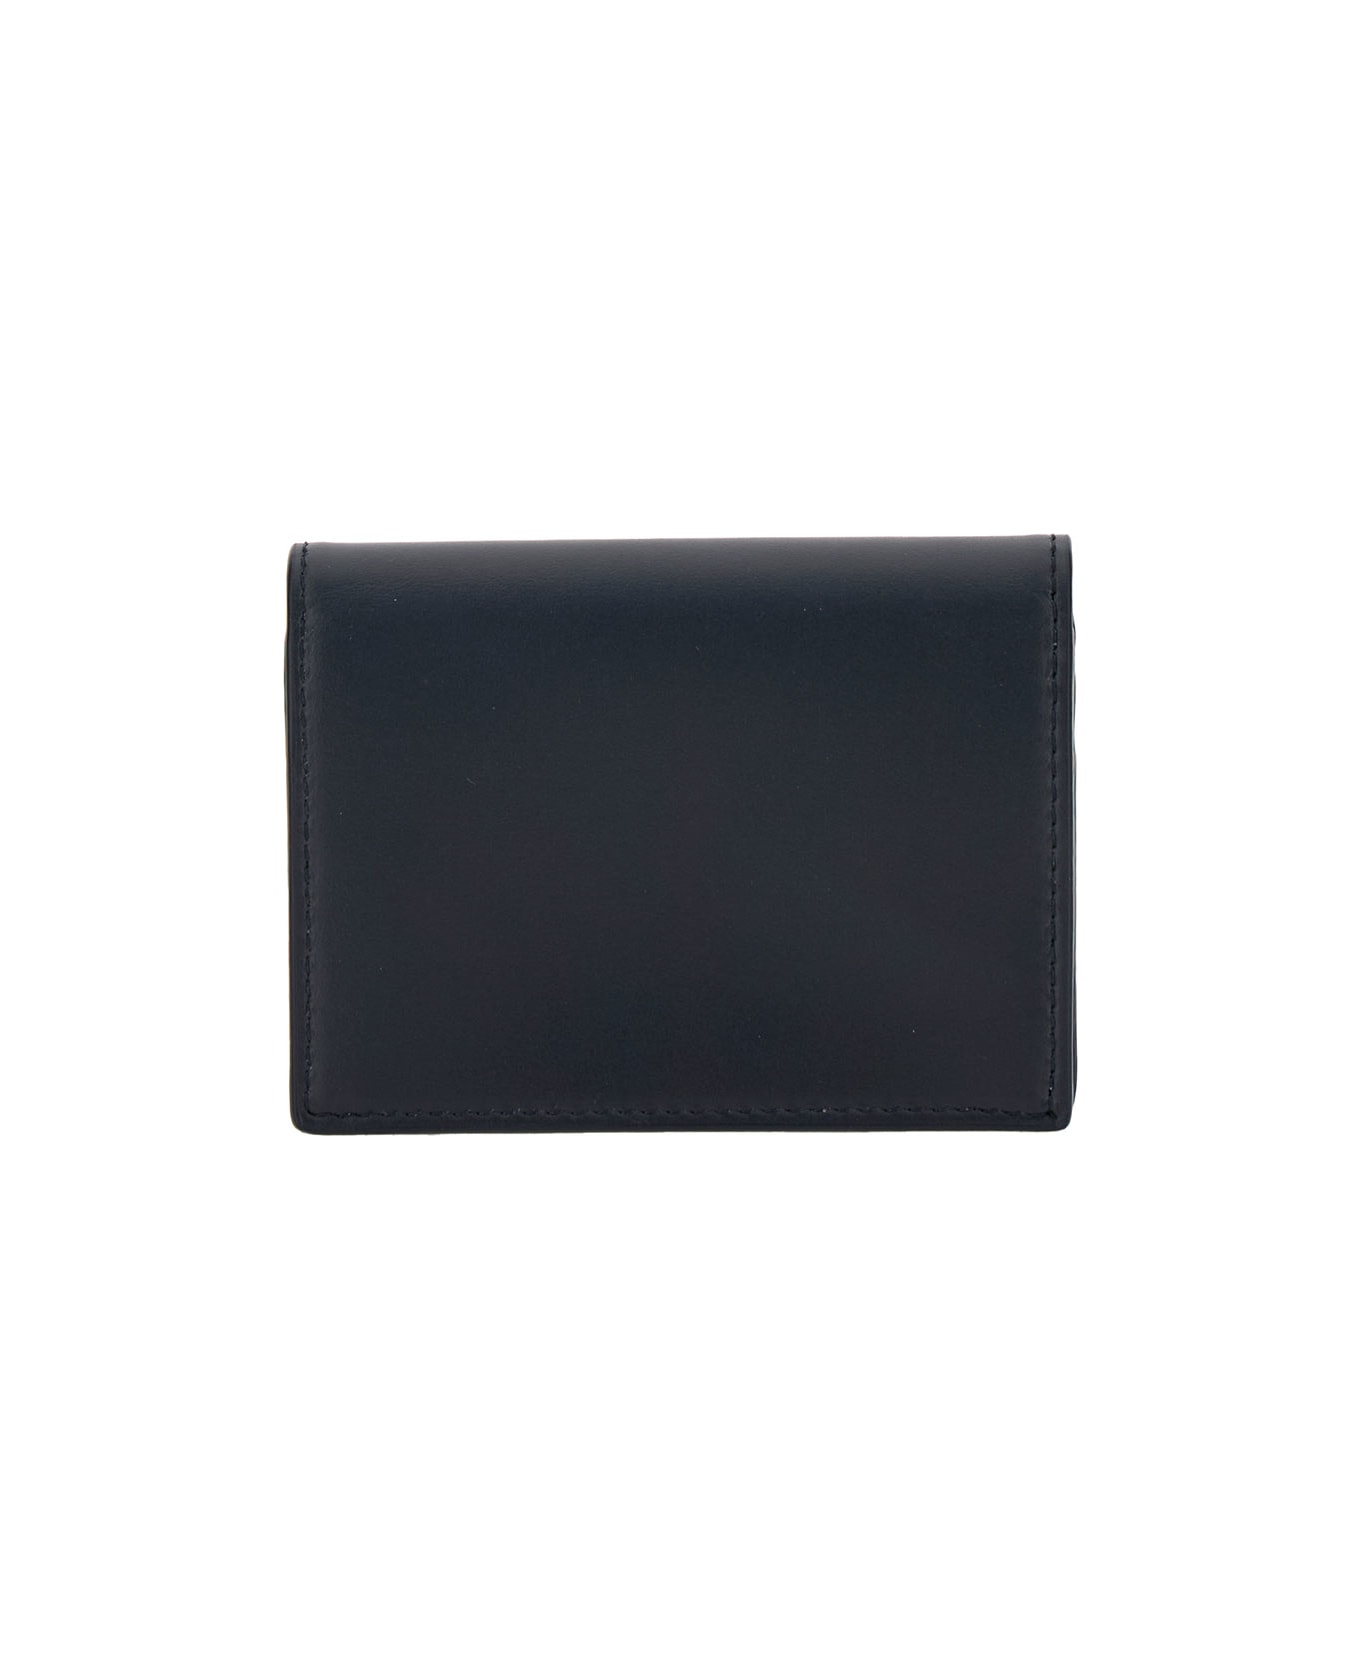 Dolce & Gabbana Black Card-holder With Logo Detail In Leather Man - Black